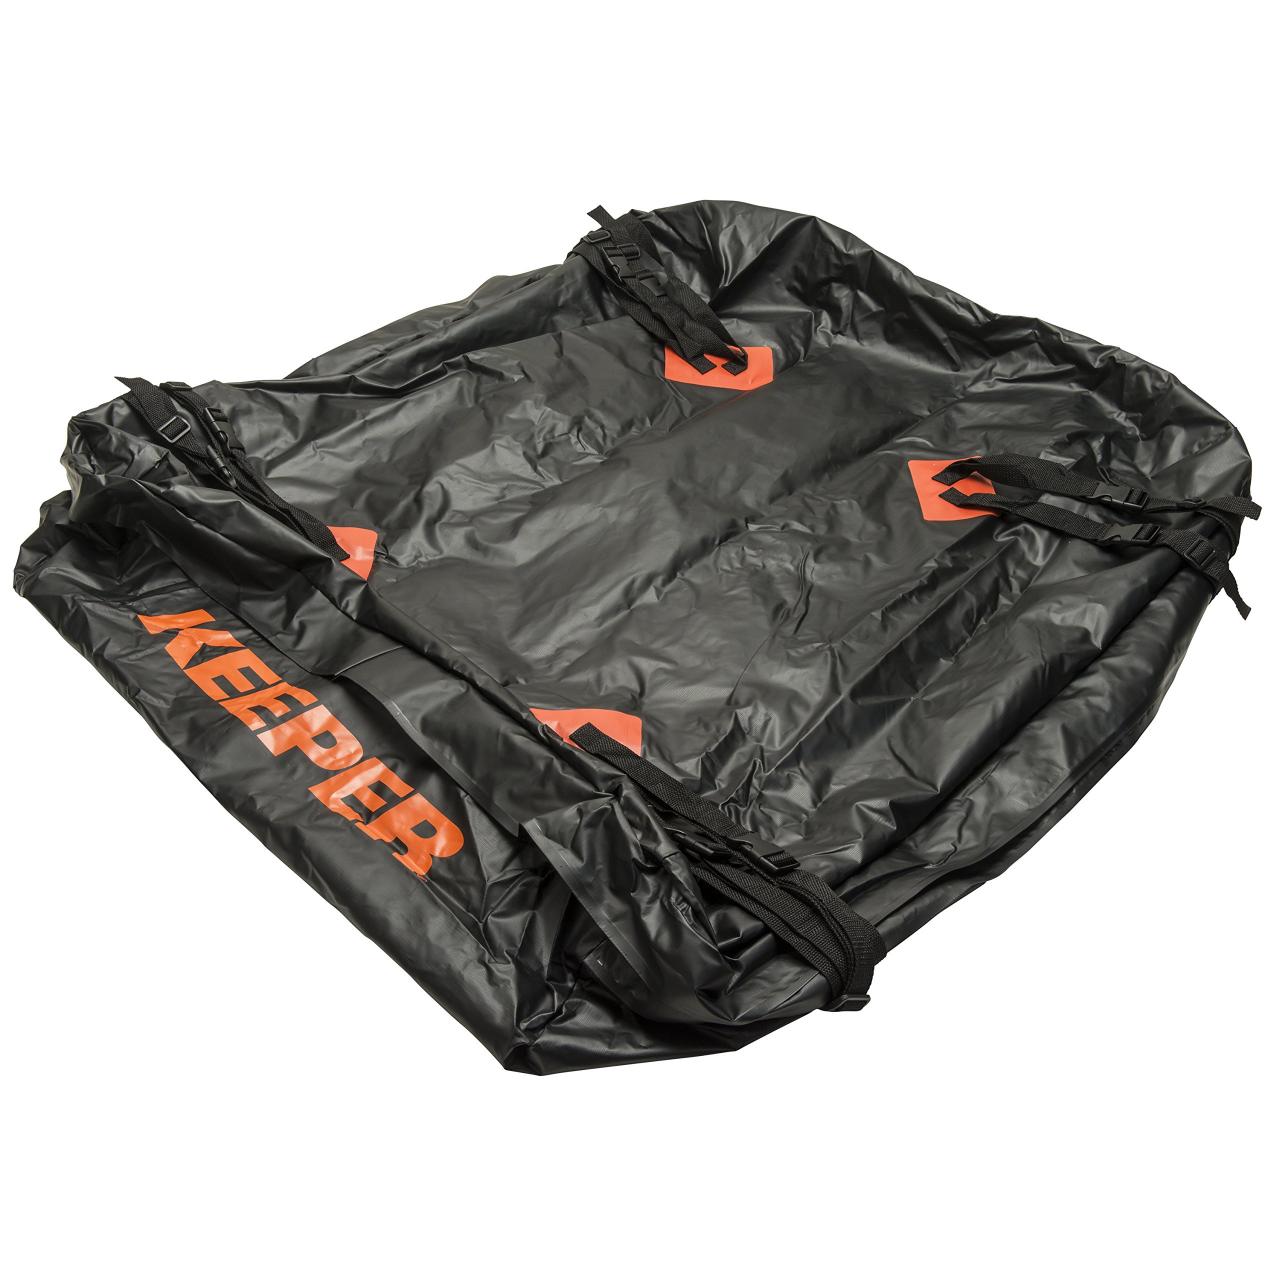 keeper waterproof rooftop cargo bag, OFF 73%,Buy!